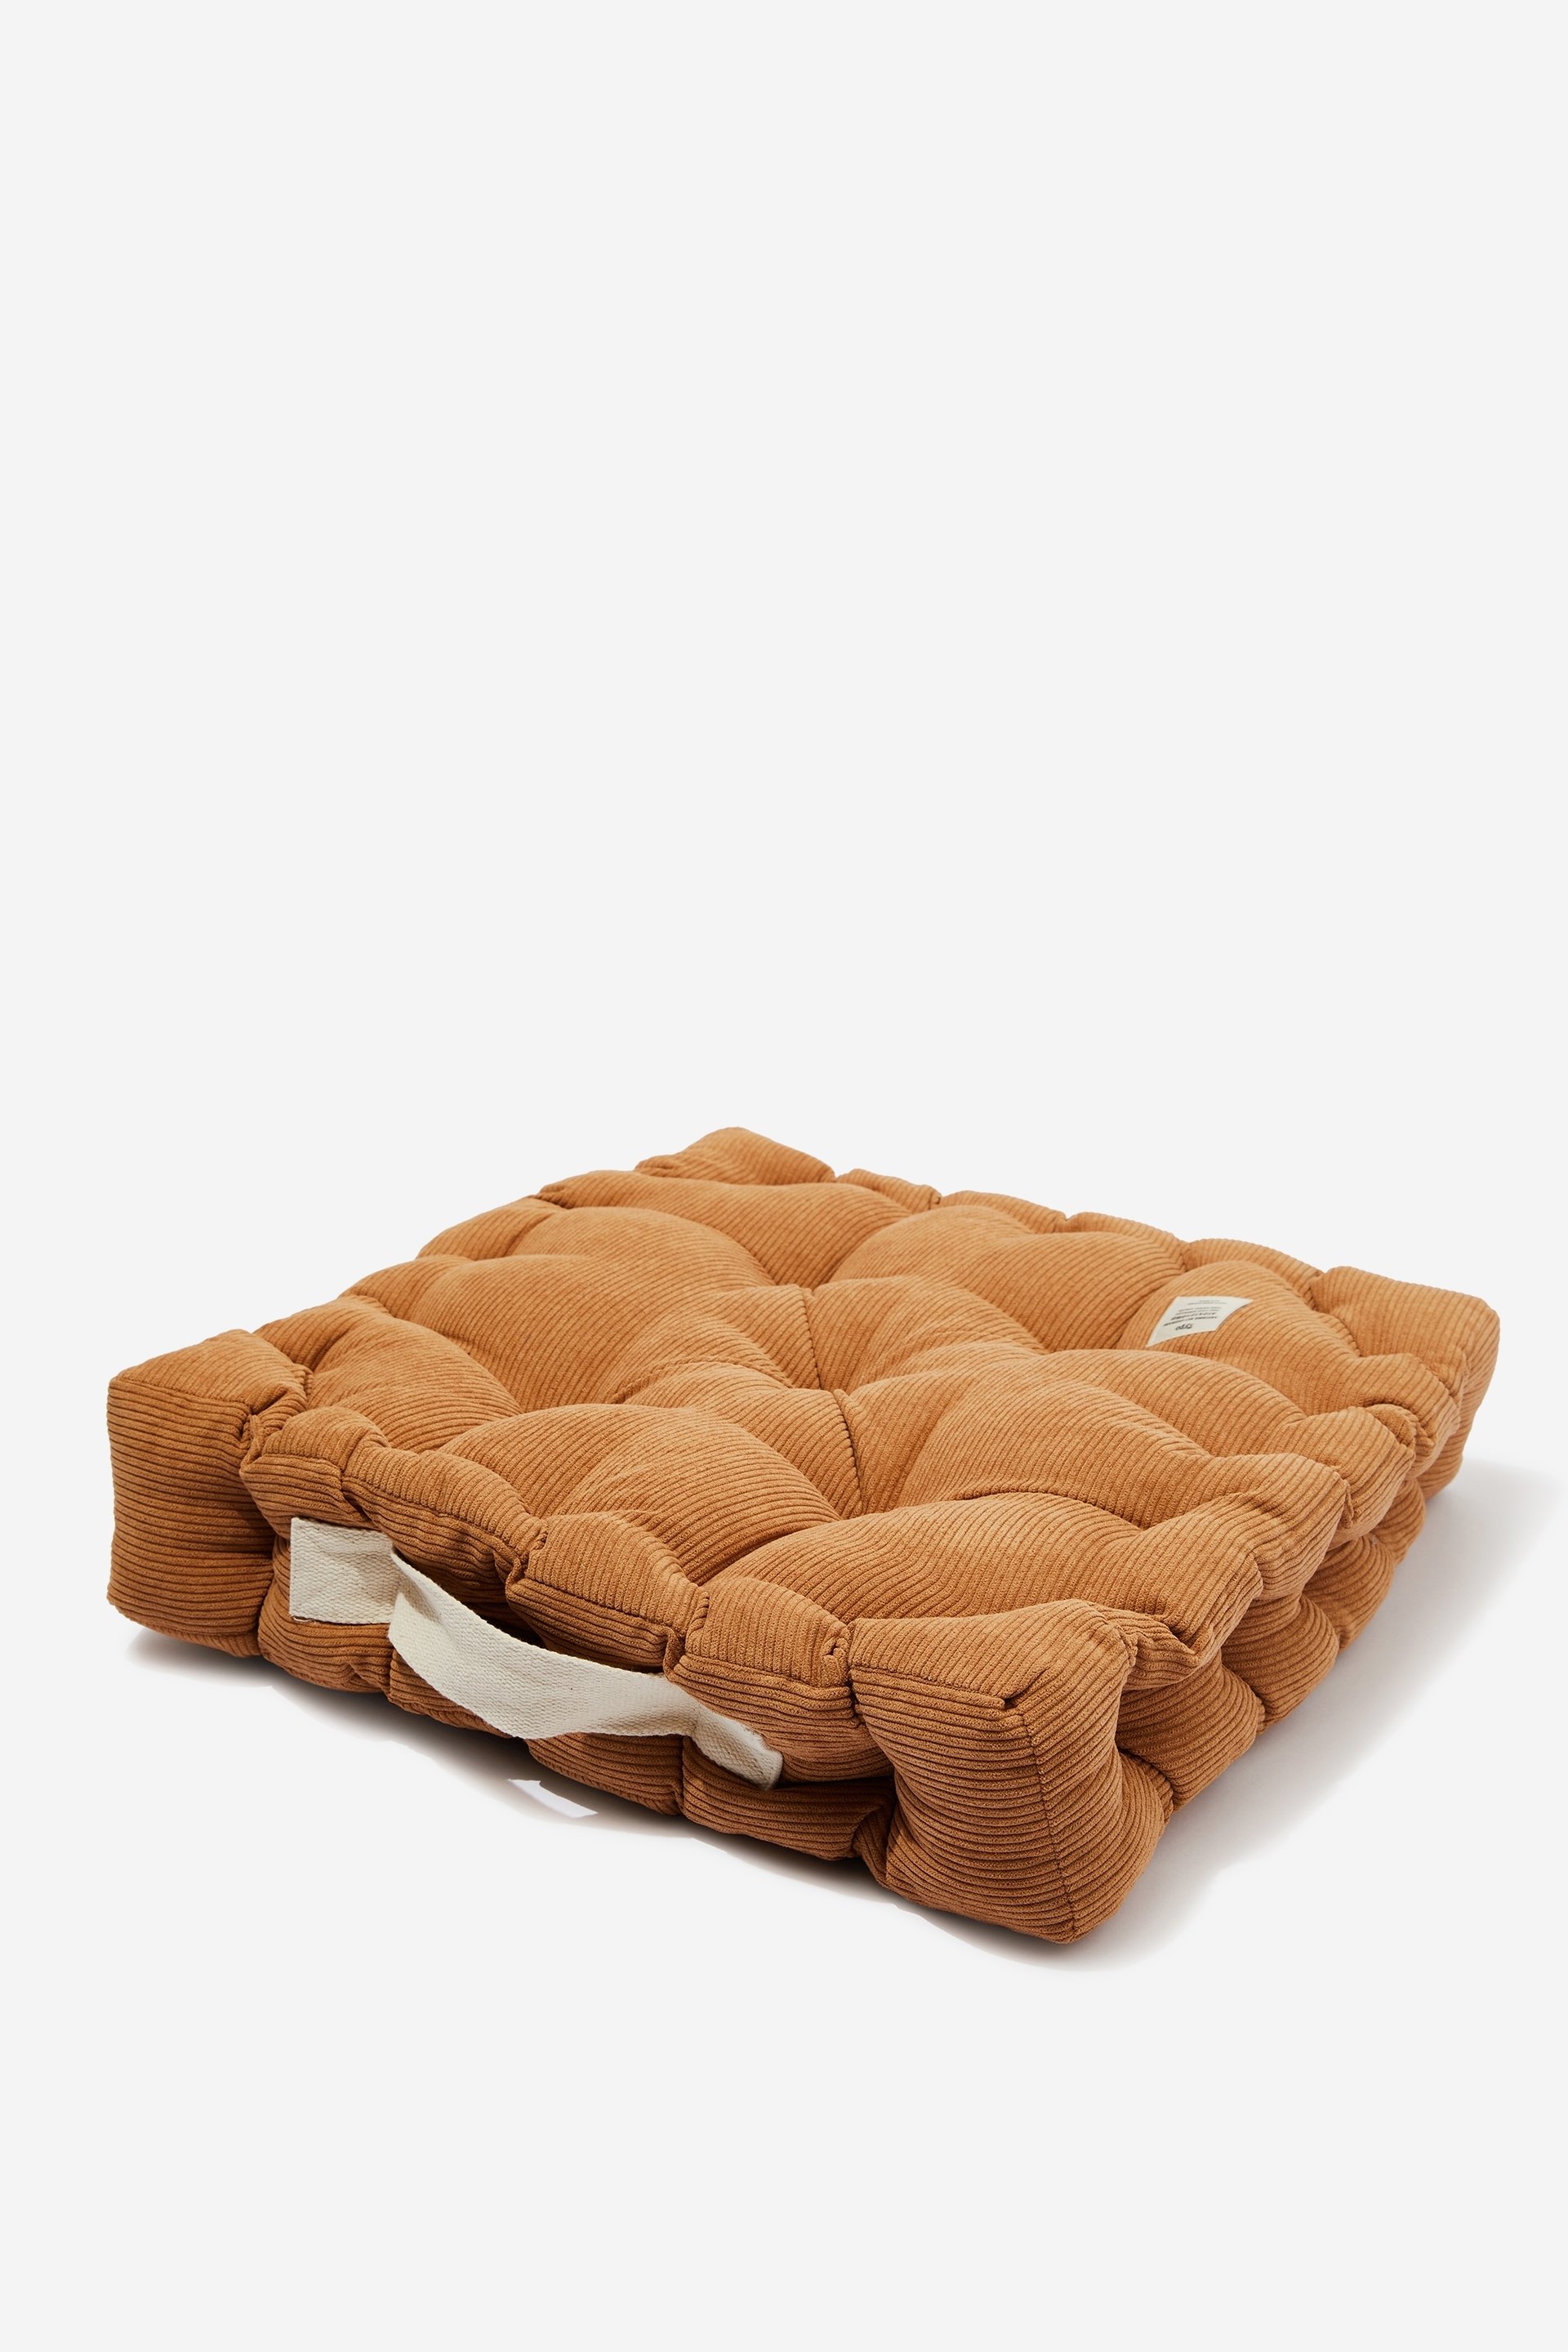 Typo - Floor Cushion - Peanut corduroy